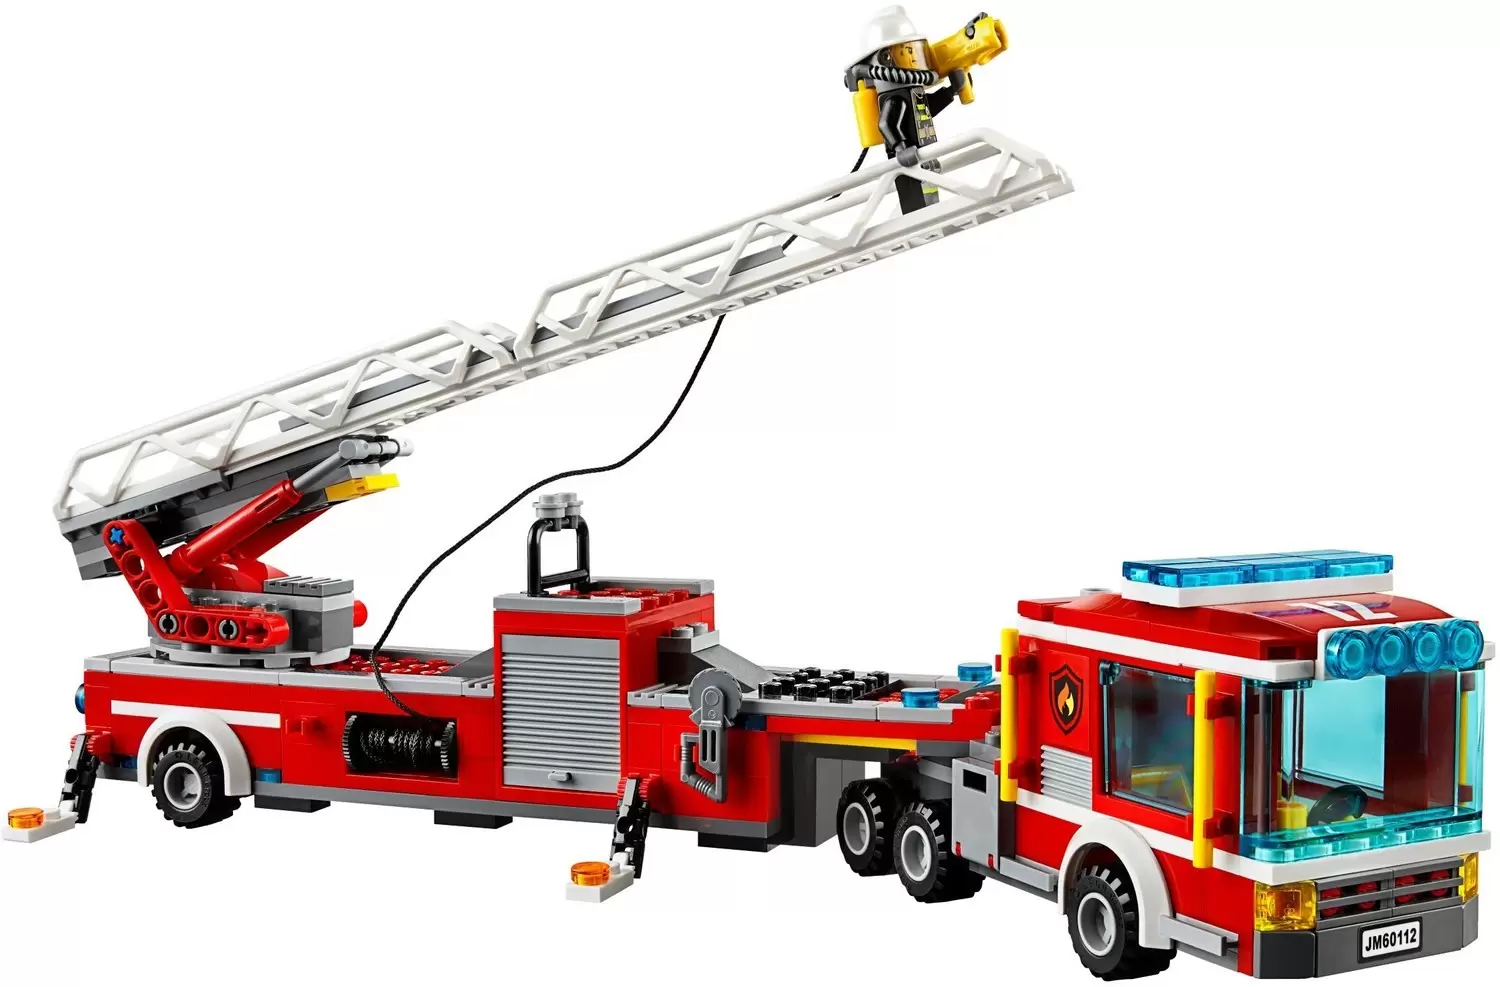 LEGO CITY - Fire Engine